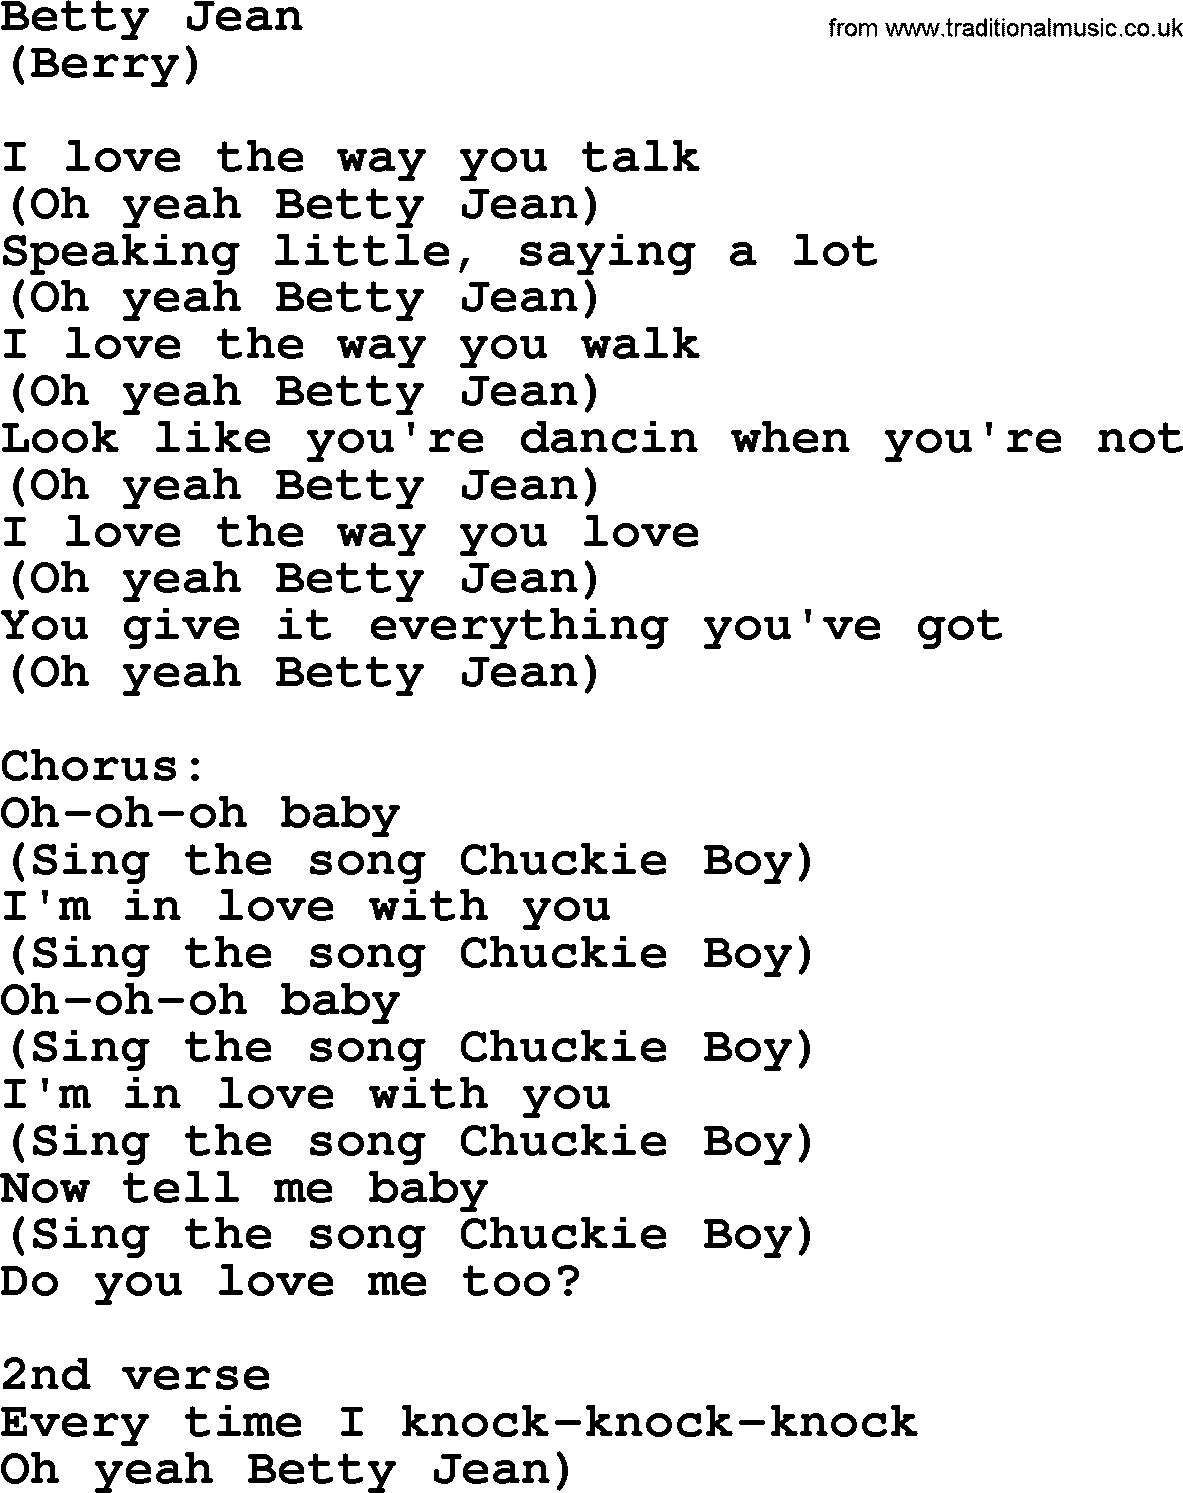 The Byrds song Betty Jean, lyrics